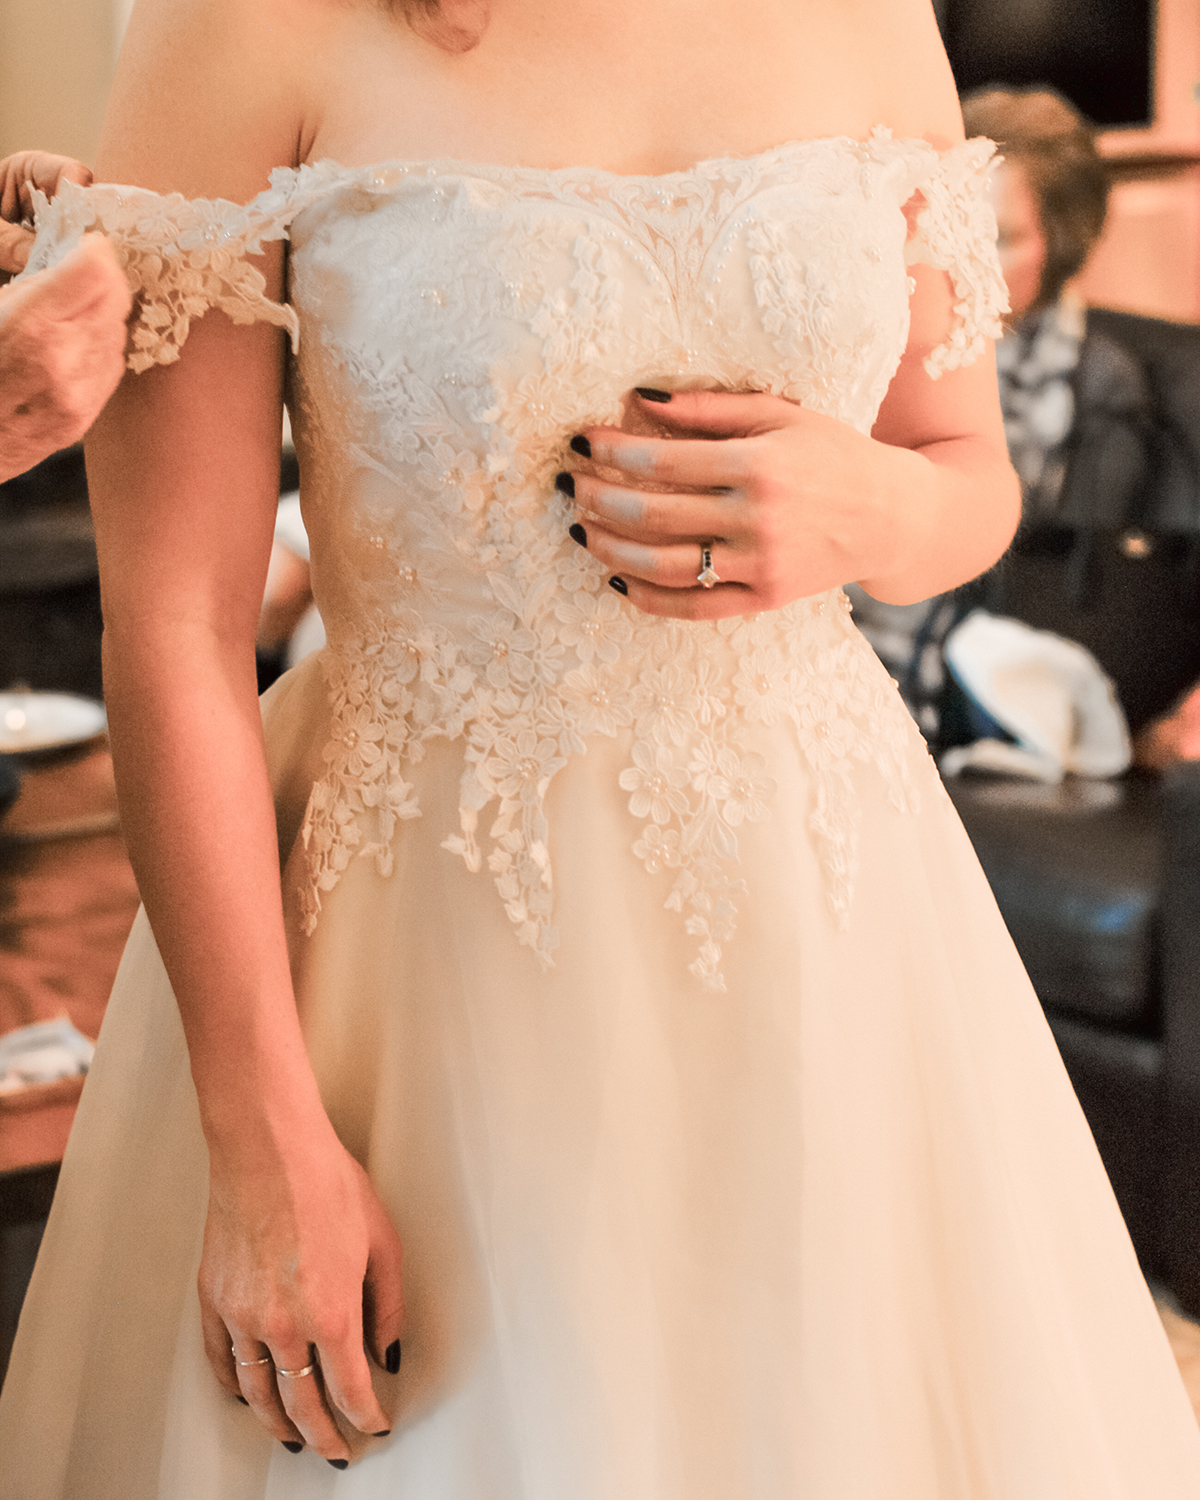 Closeup of a chiffon wedding dress with a lace applique bodice